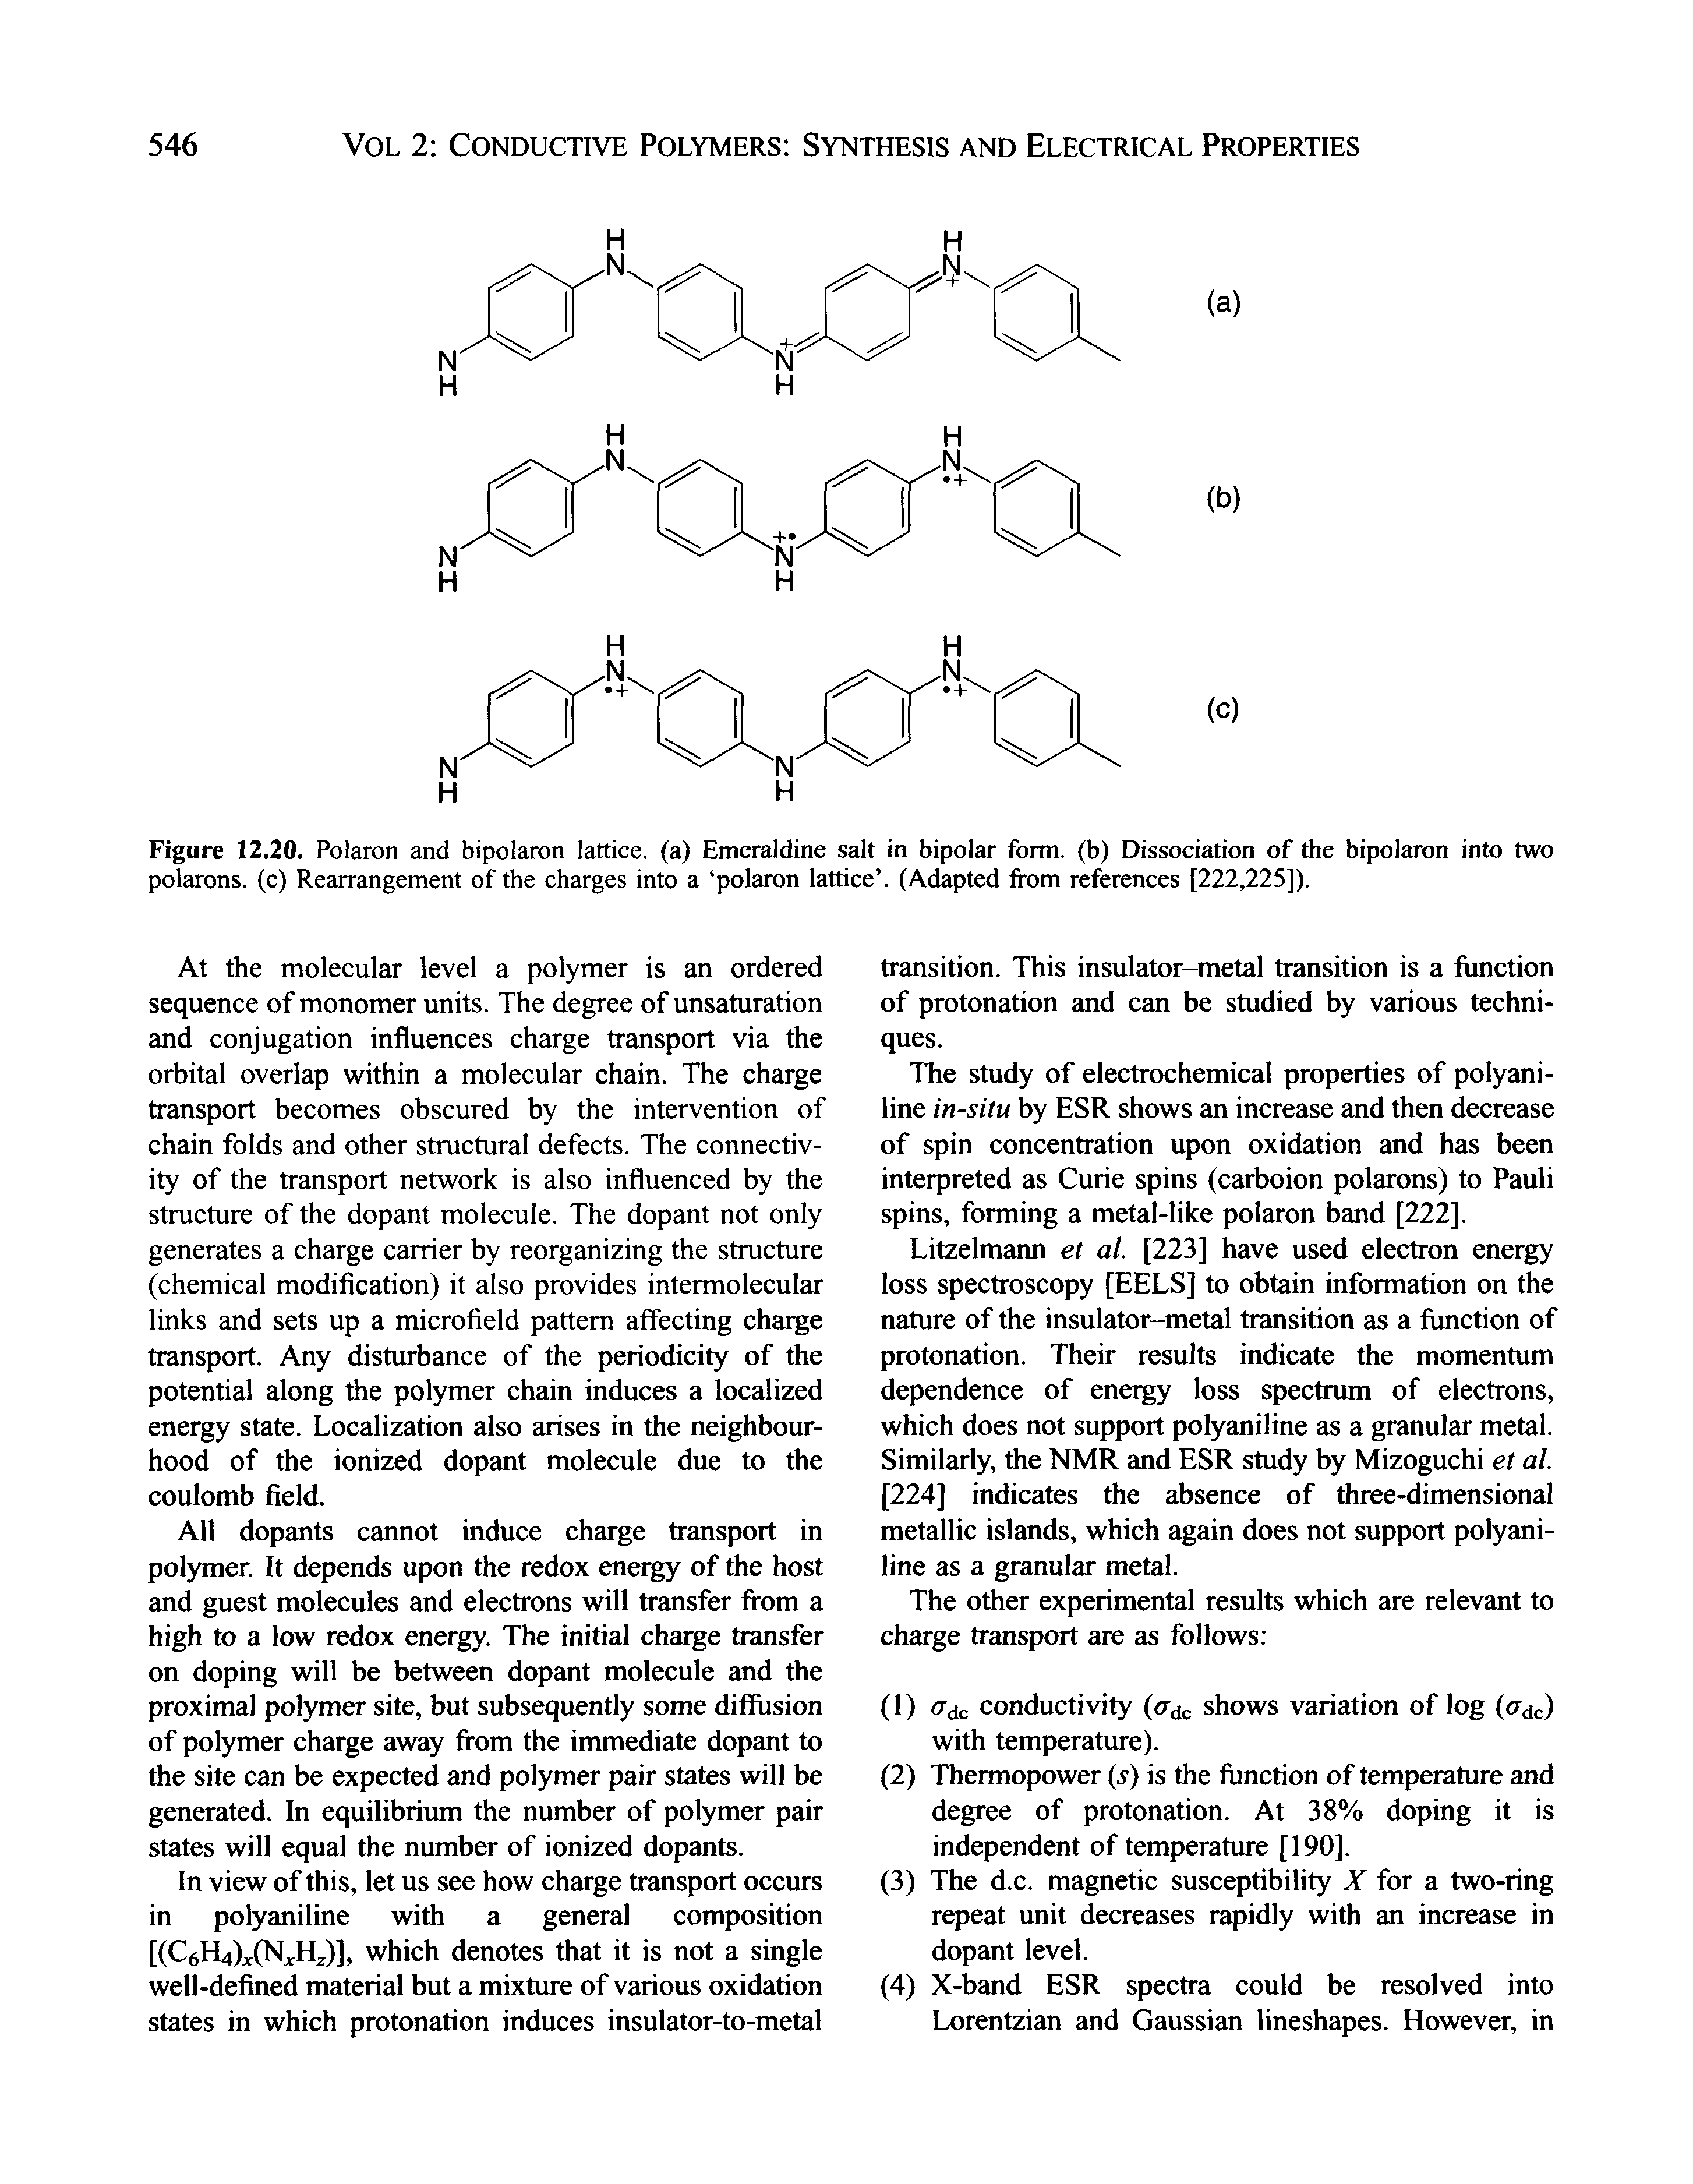 Figure 12.20. Polaron and bipolaron lattice, (a) Emeraldine salt in bipolar form, (b) Dissociation of the bipolaron into two polarons. (c) Rearrangement of the charges into a polaron lattice . (Adapted from references [222,225]).